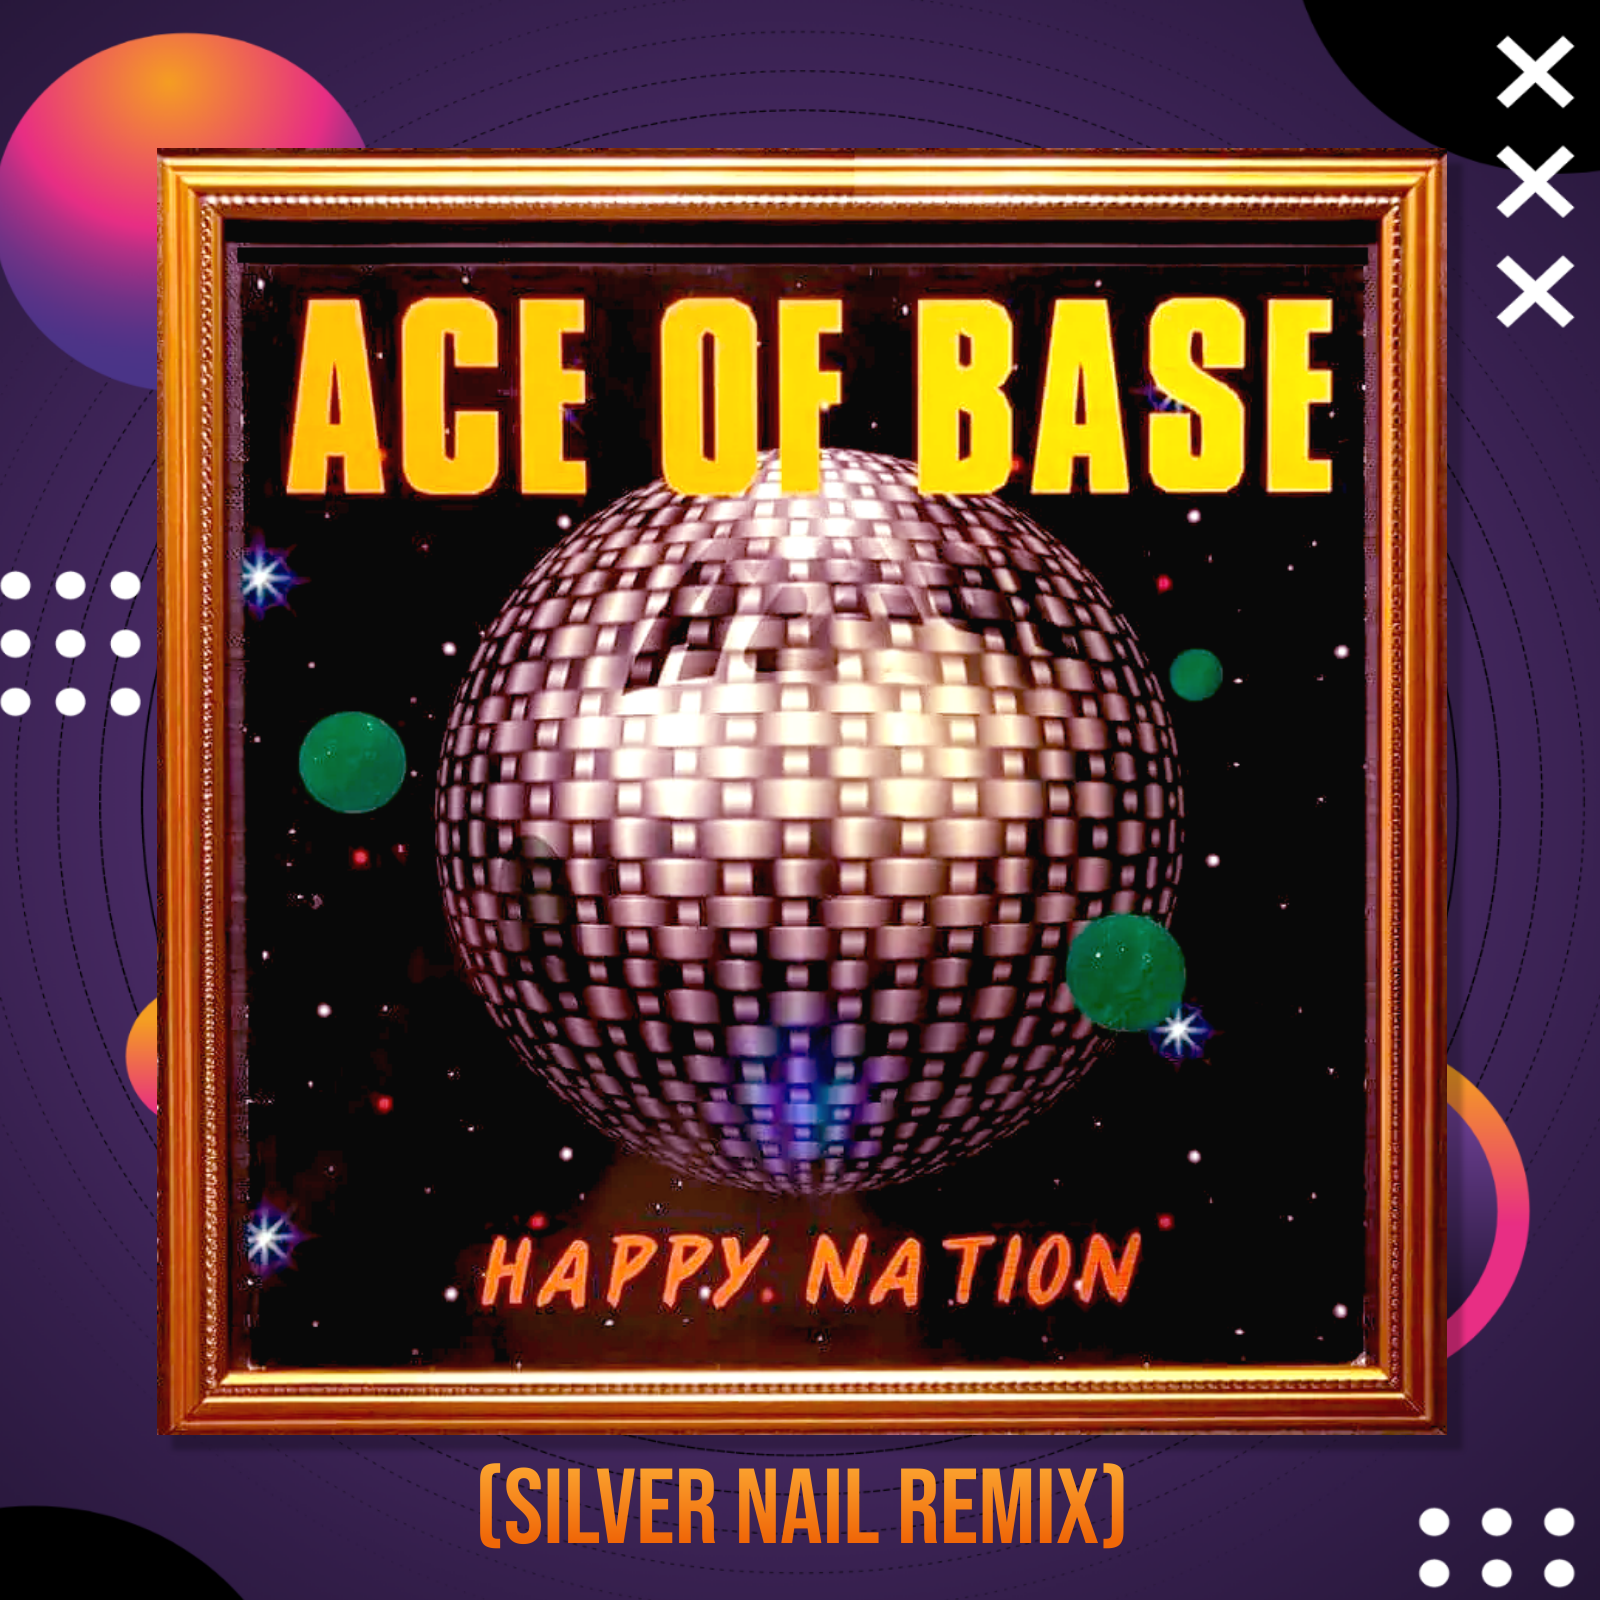 Fred mykos happy nation. Хэппи натион. Happy Nation обложка. Ace of Base Happy Nation обложка. Хапи нецшег.